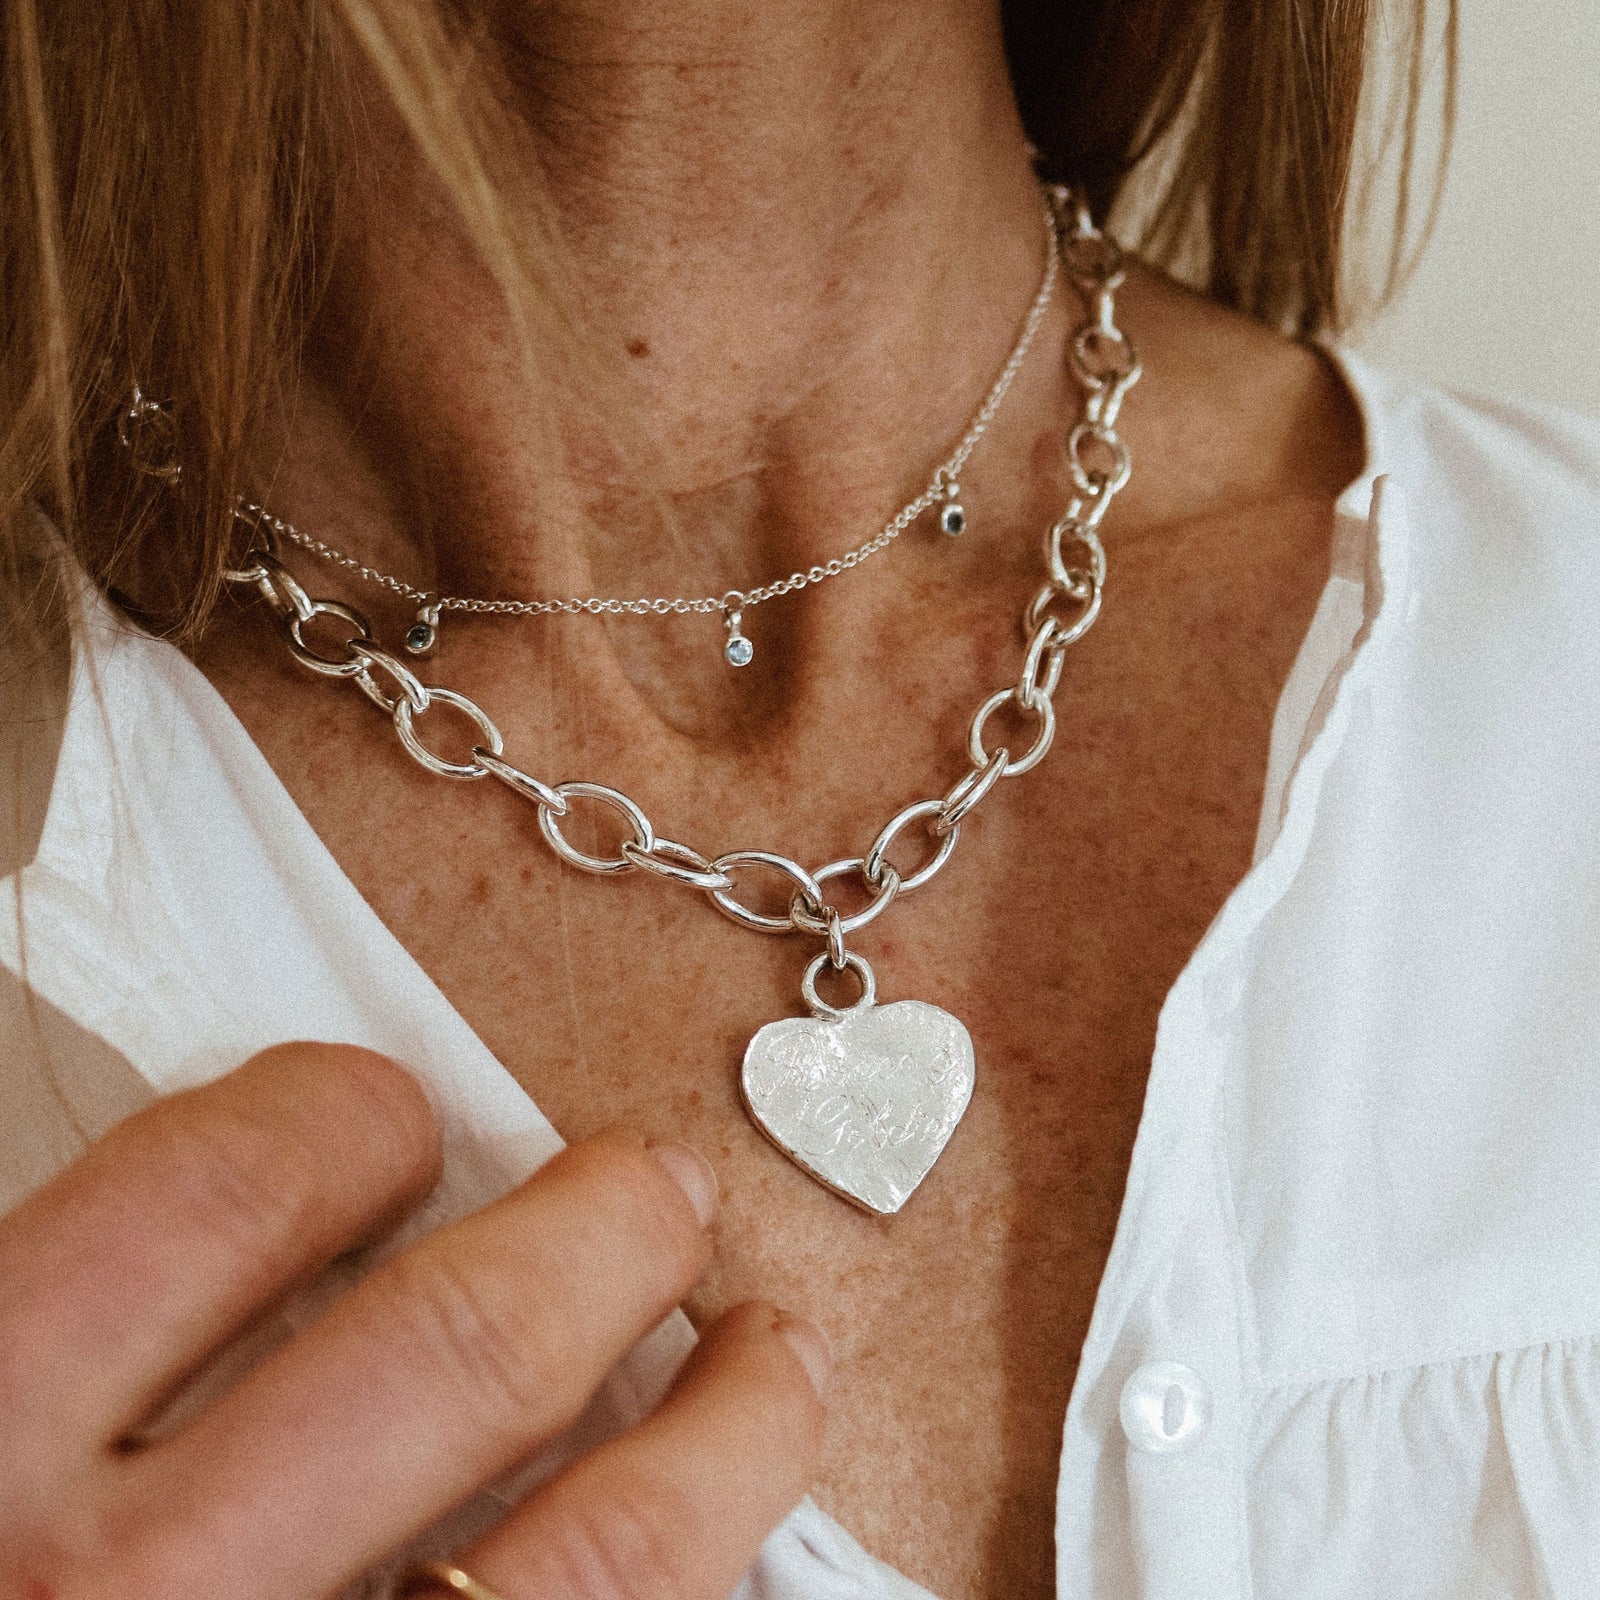 Silver Luxury Keeper's Heart Necklace